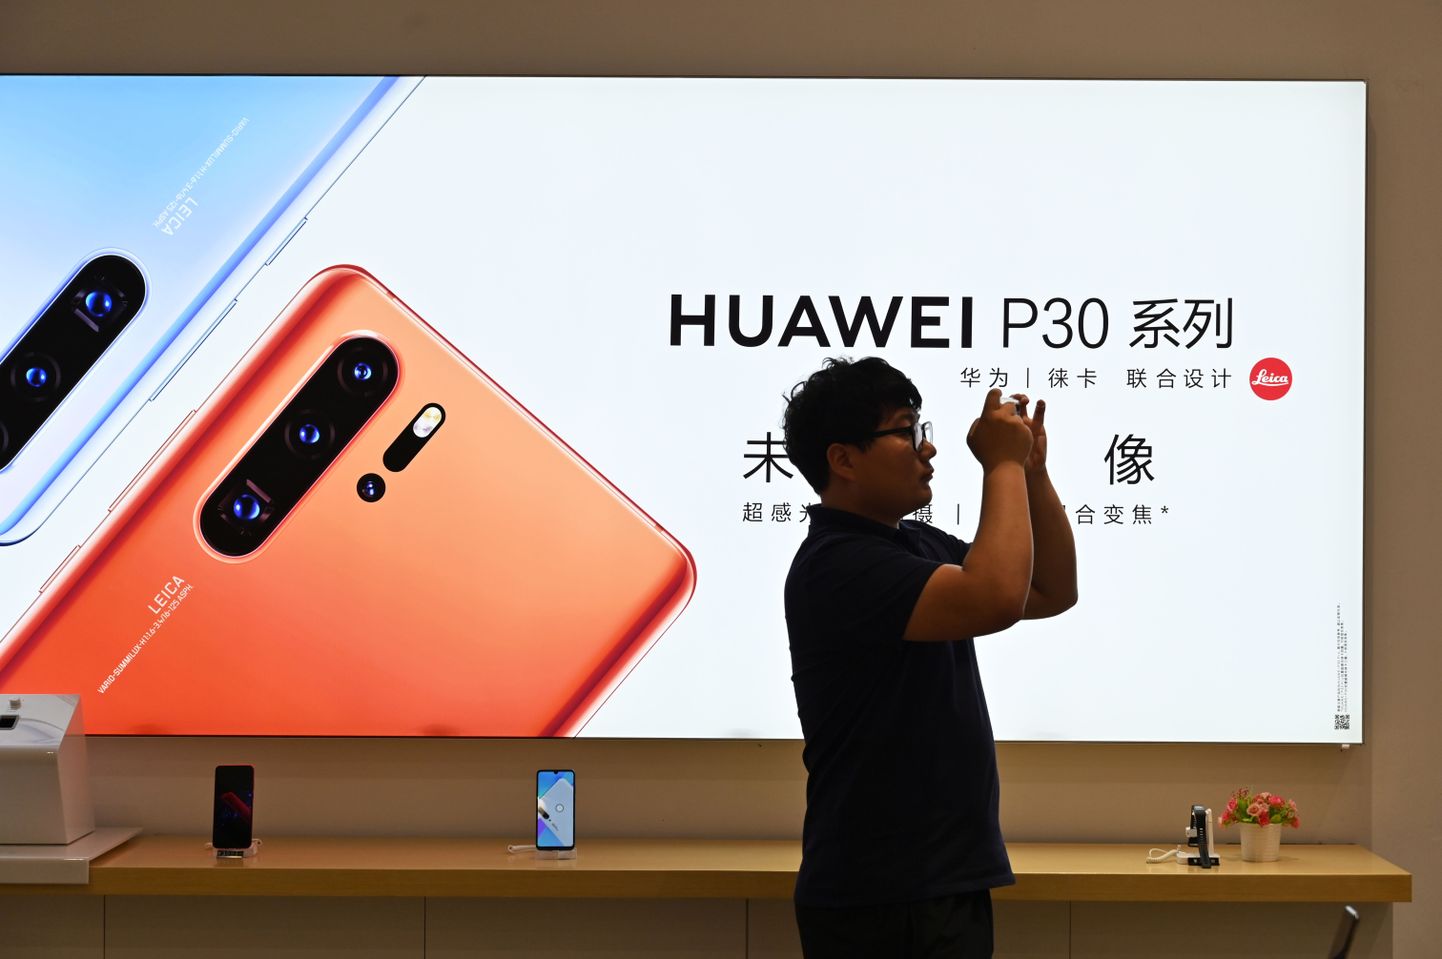 Huawei reklaam Shanghais.